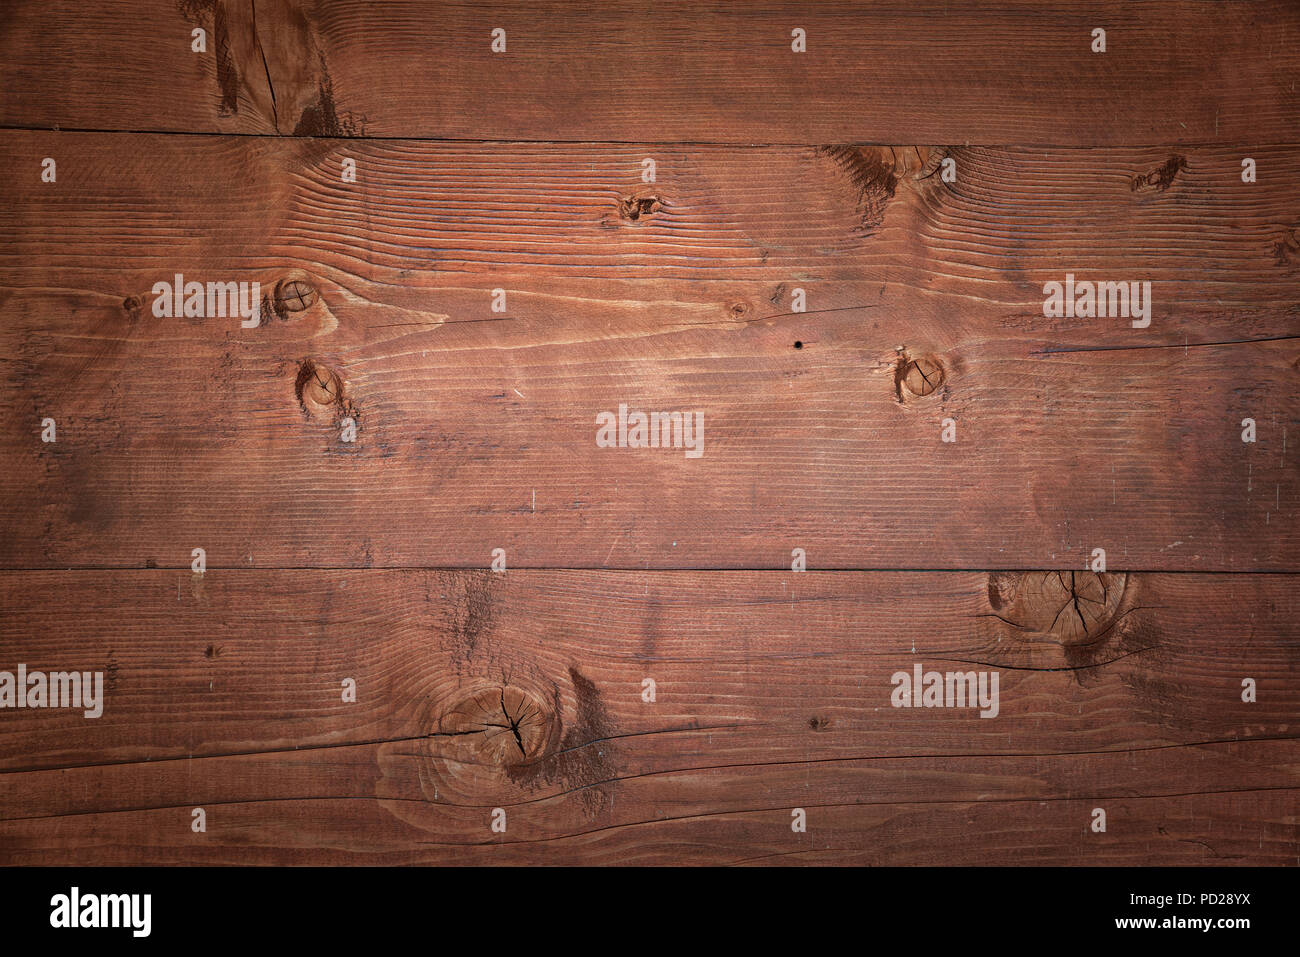 Marrón madera vieja pared de tablones textura del fondo Foto de stock